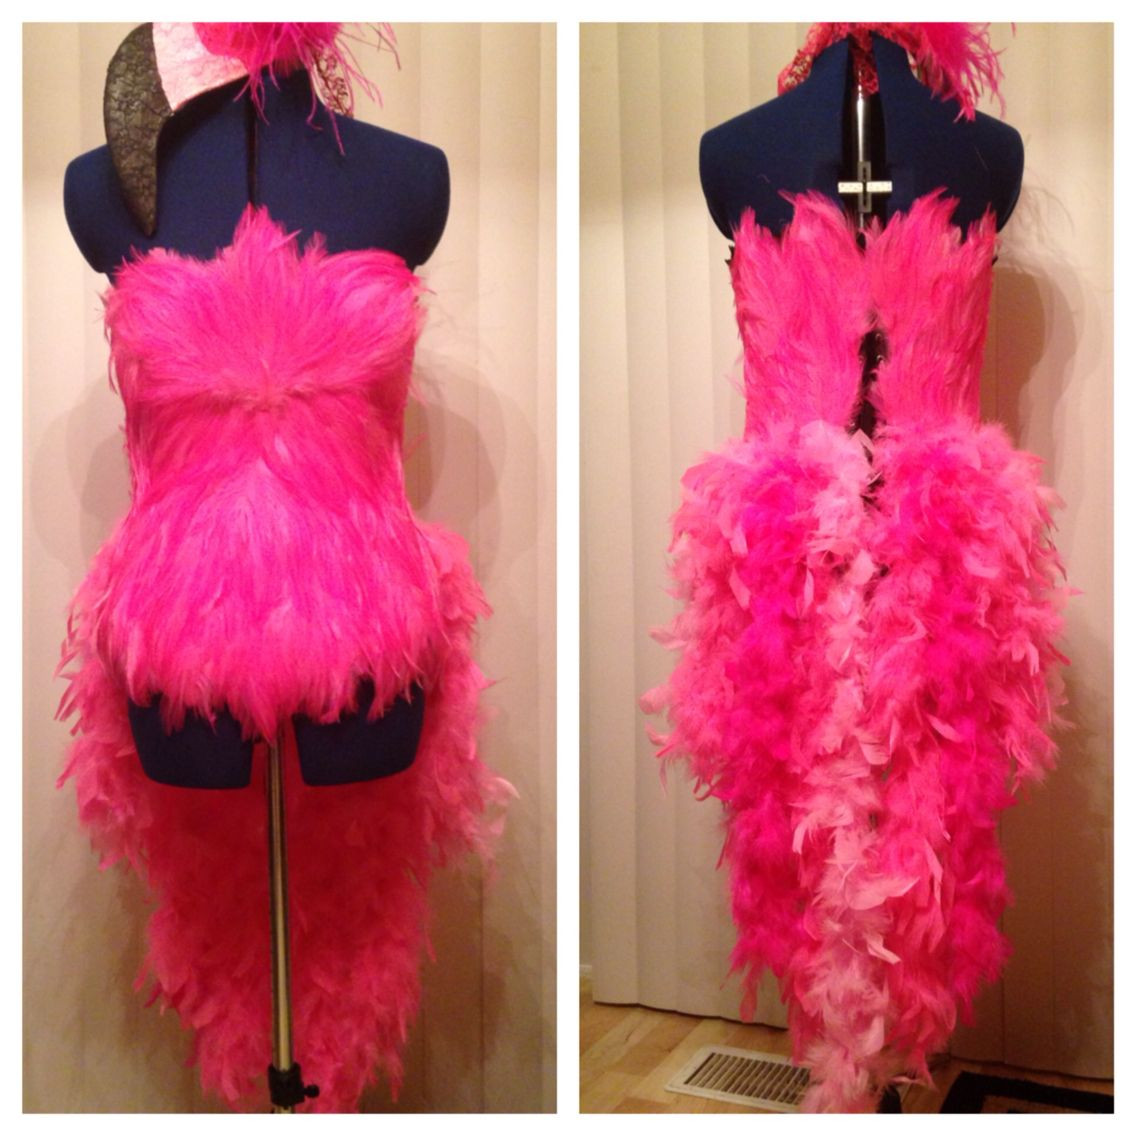 DIY Burlesque Costume
 DIY Corset flamingo costume with burlesque tail Purchased